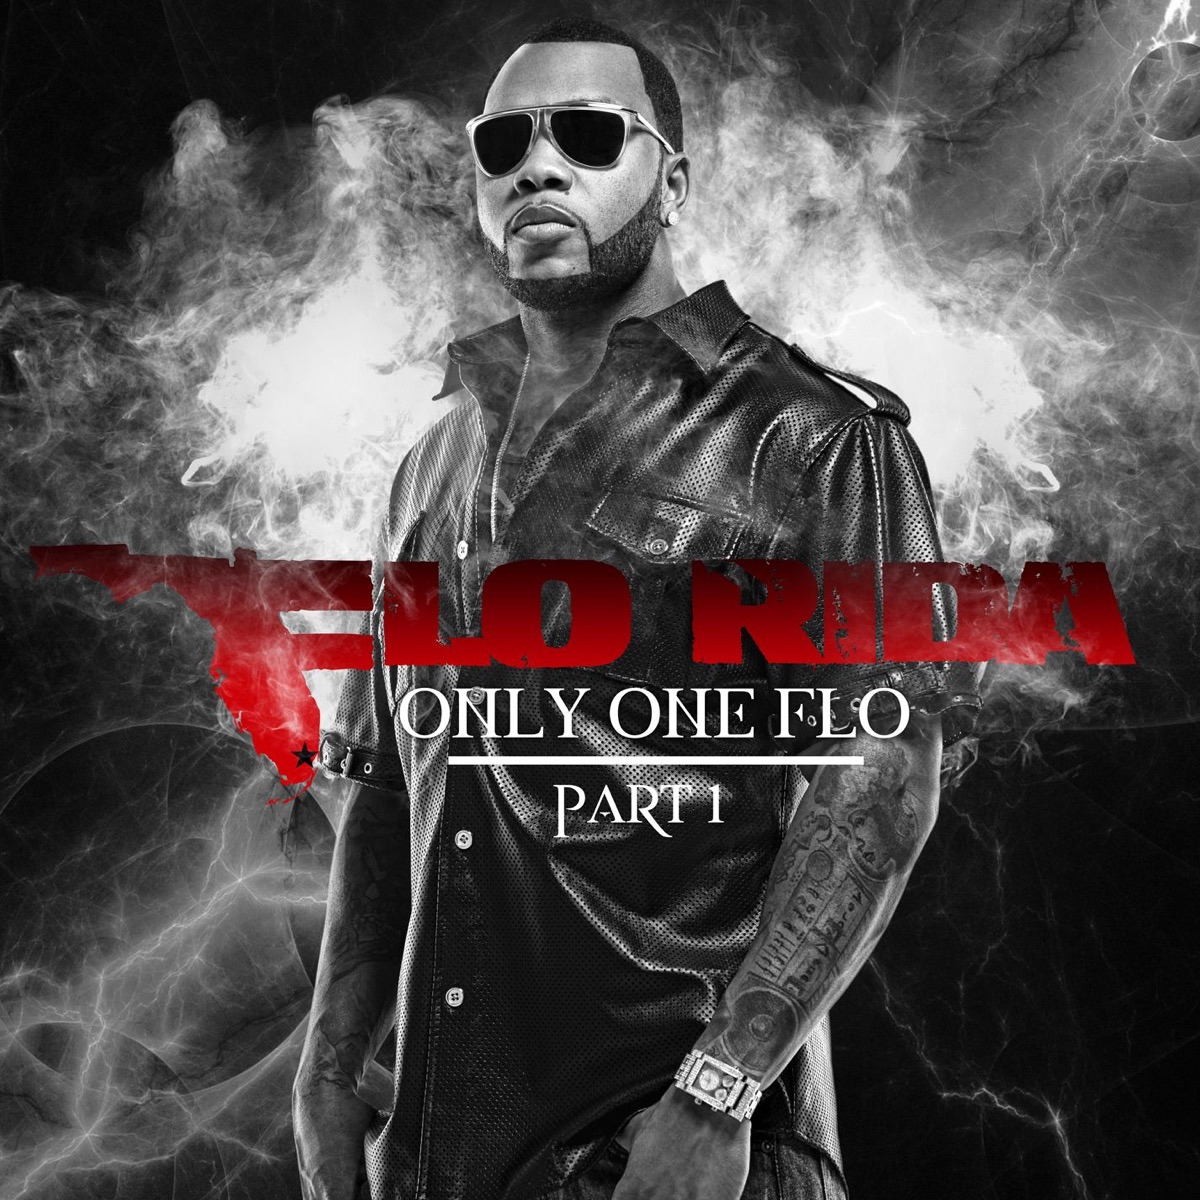 Hola (feat. Maluma) - Single by Flo Rida on Apple Music